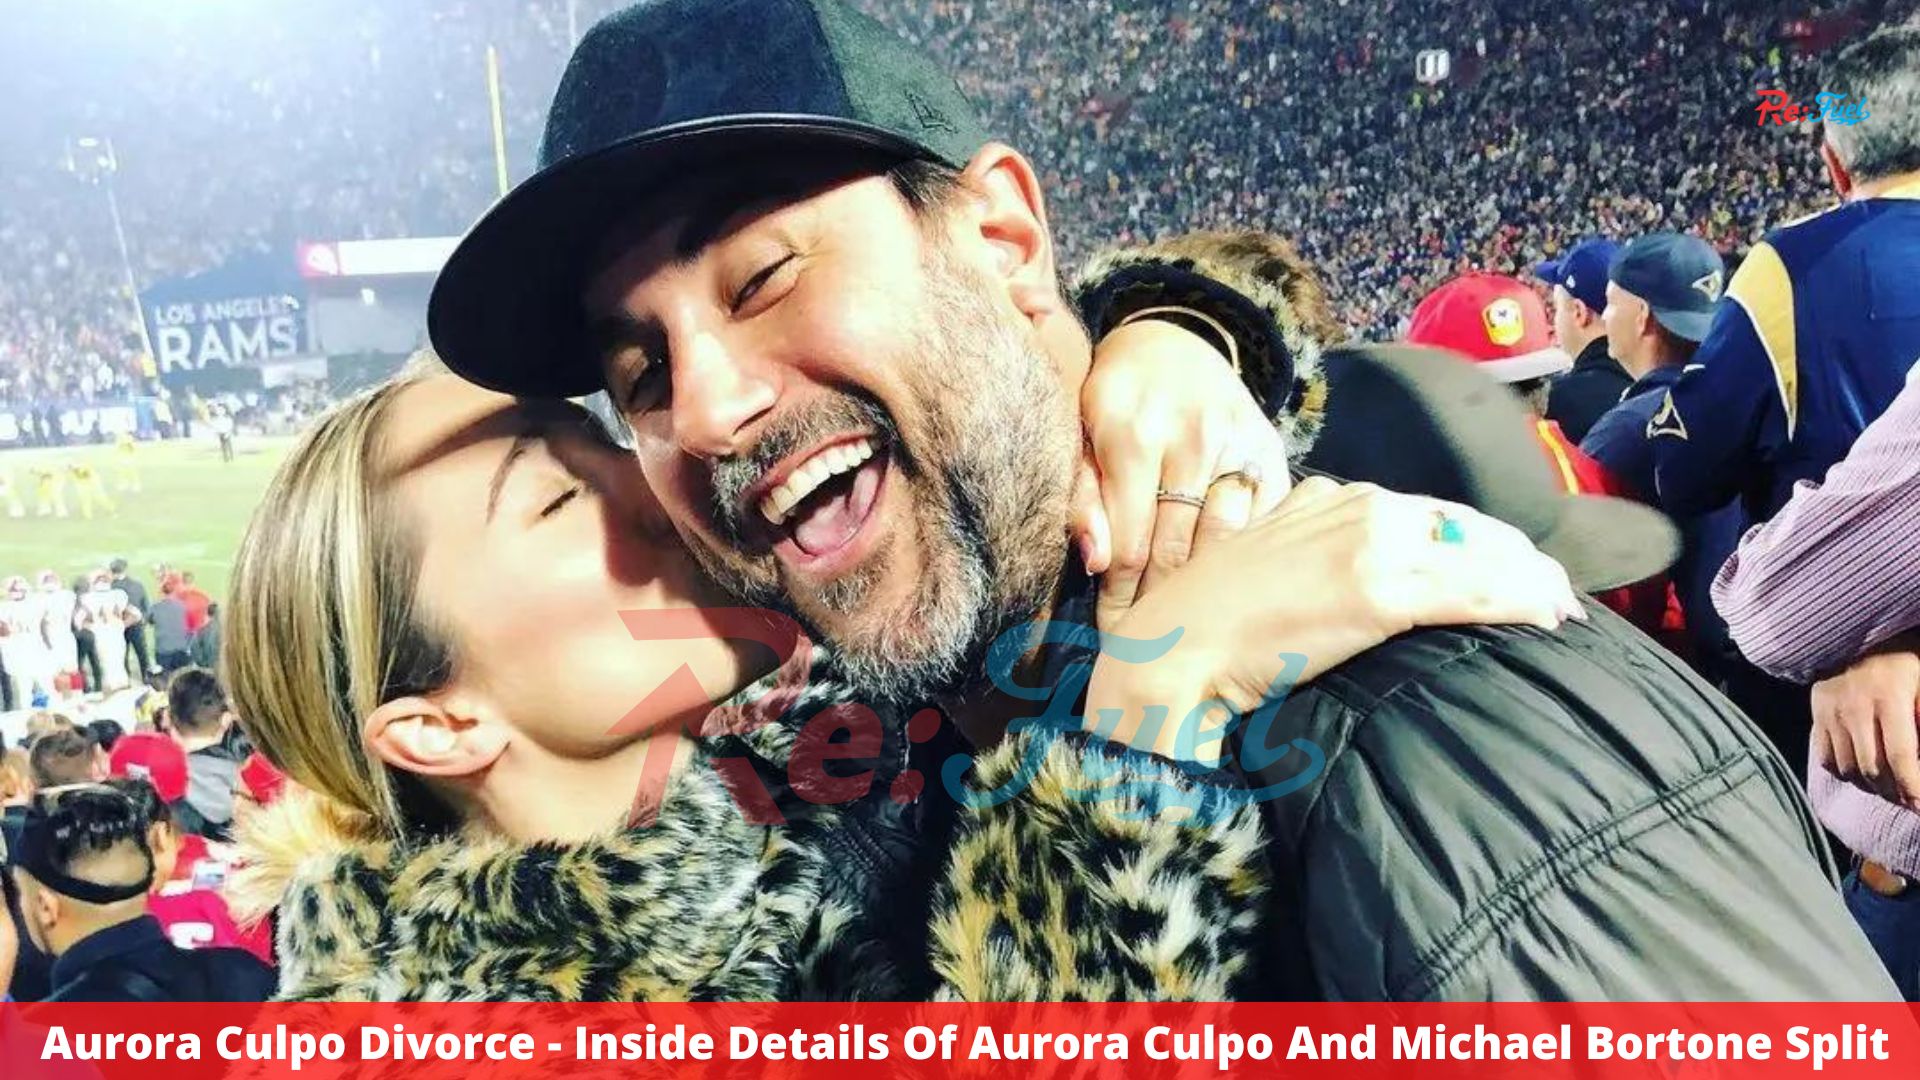 Aurora Culpo Divorce - Inside Details Of Aurora Culpo And Michael Bortone Split